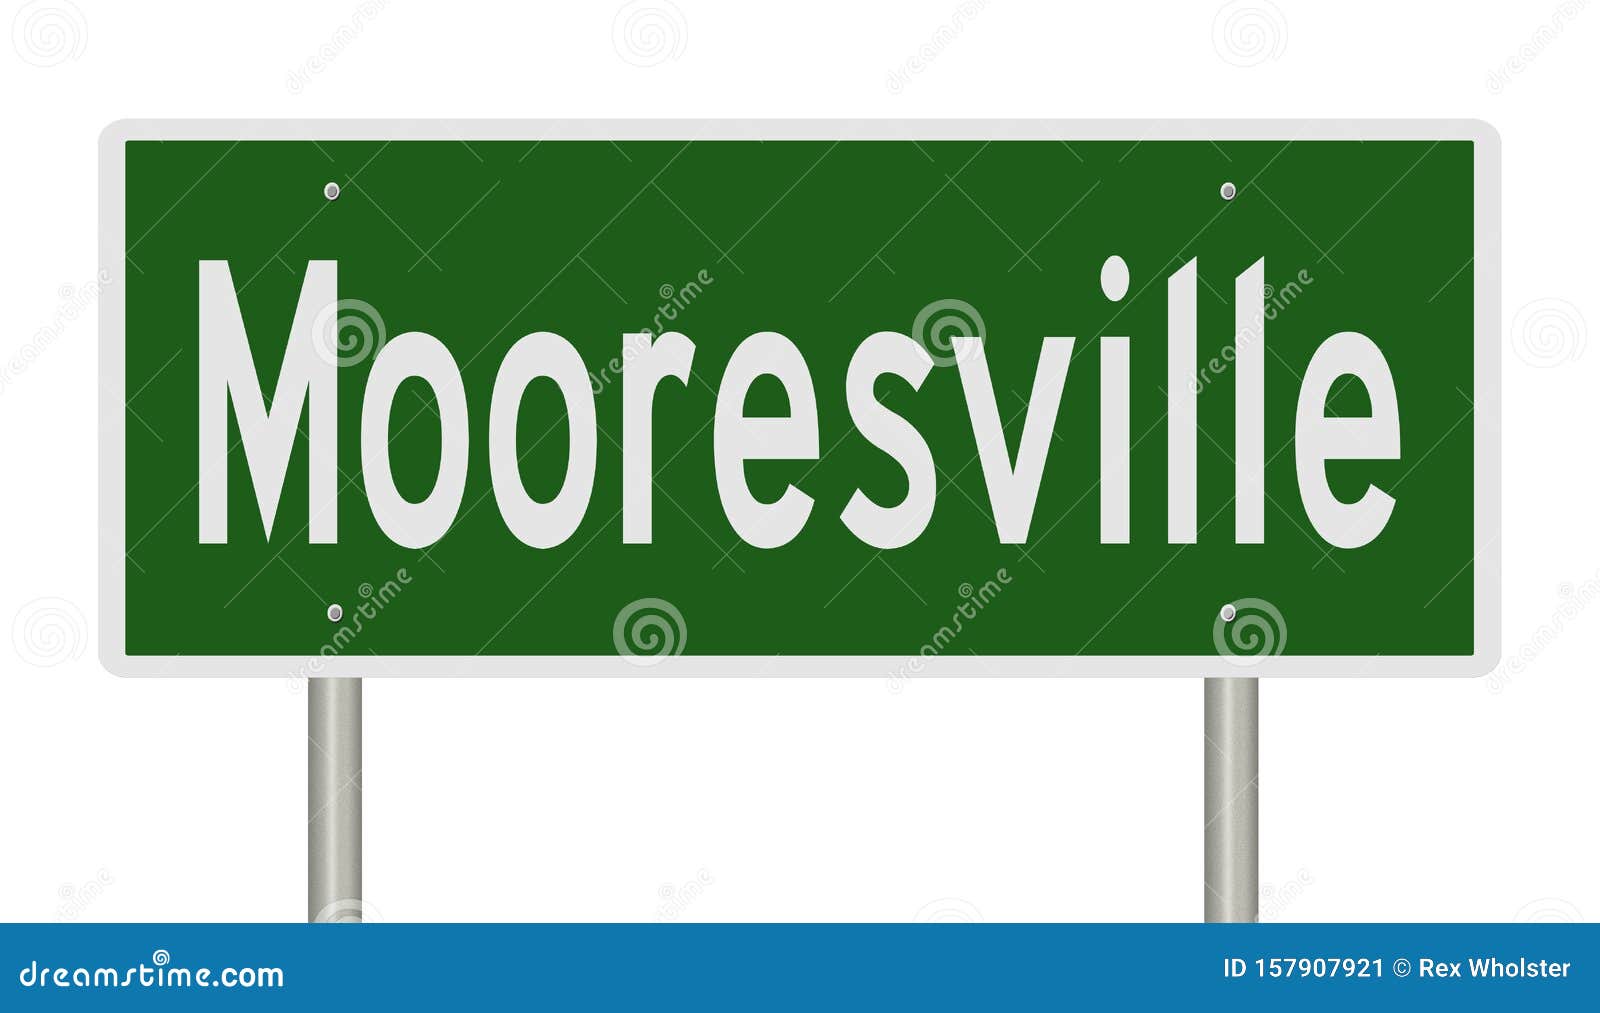 Highway Sign for Mooresville North Carolina Stock Illustration ...